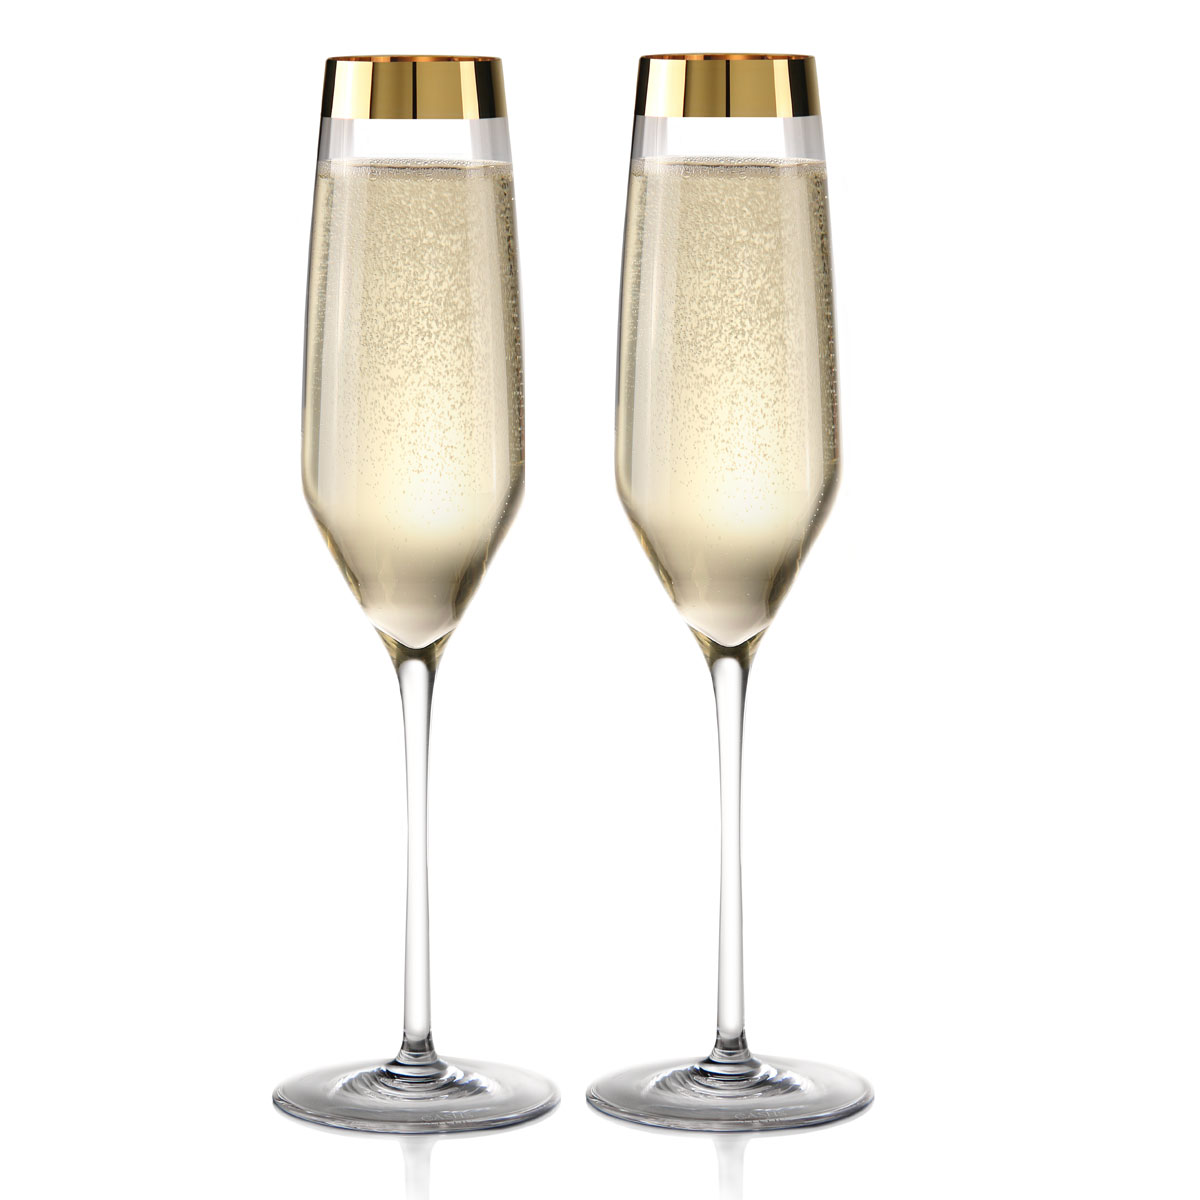 Cashs Ireland Grand Cru Gold Champagne Flute Glasses, Pair